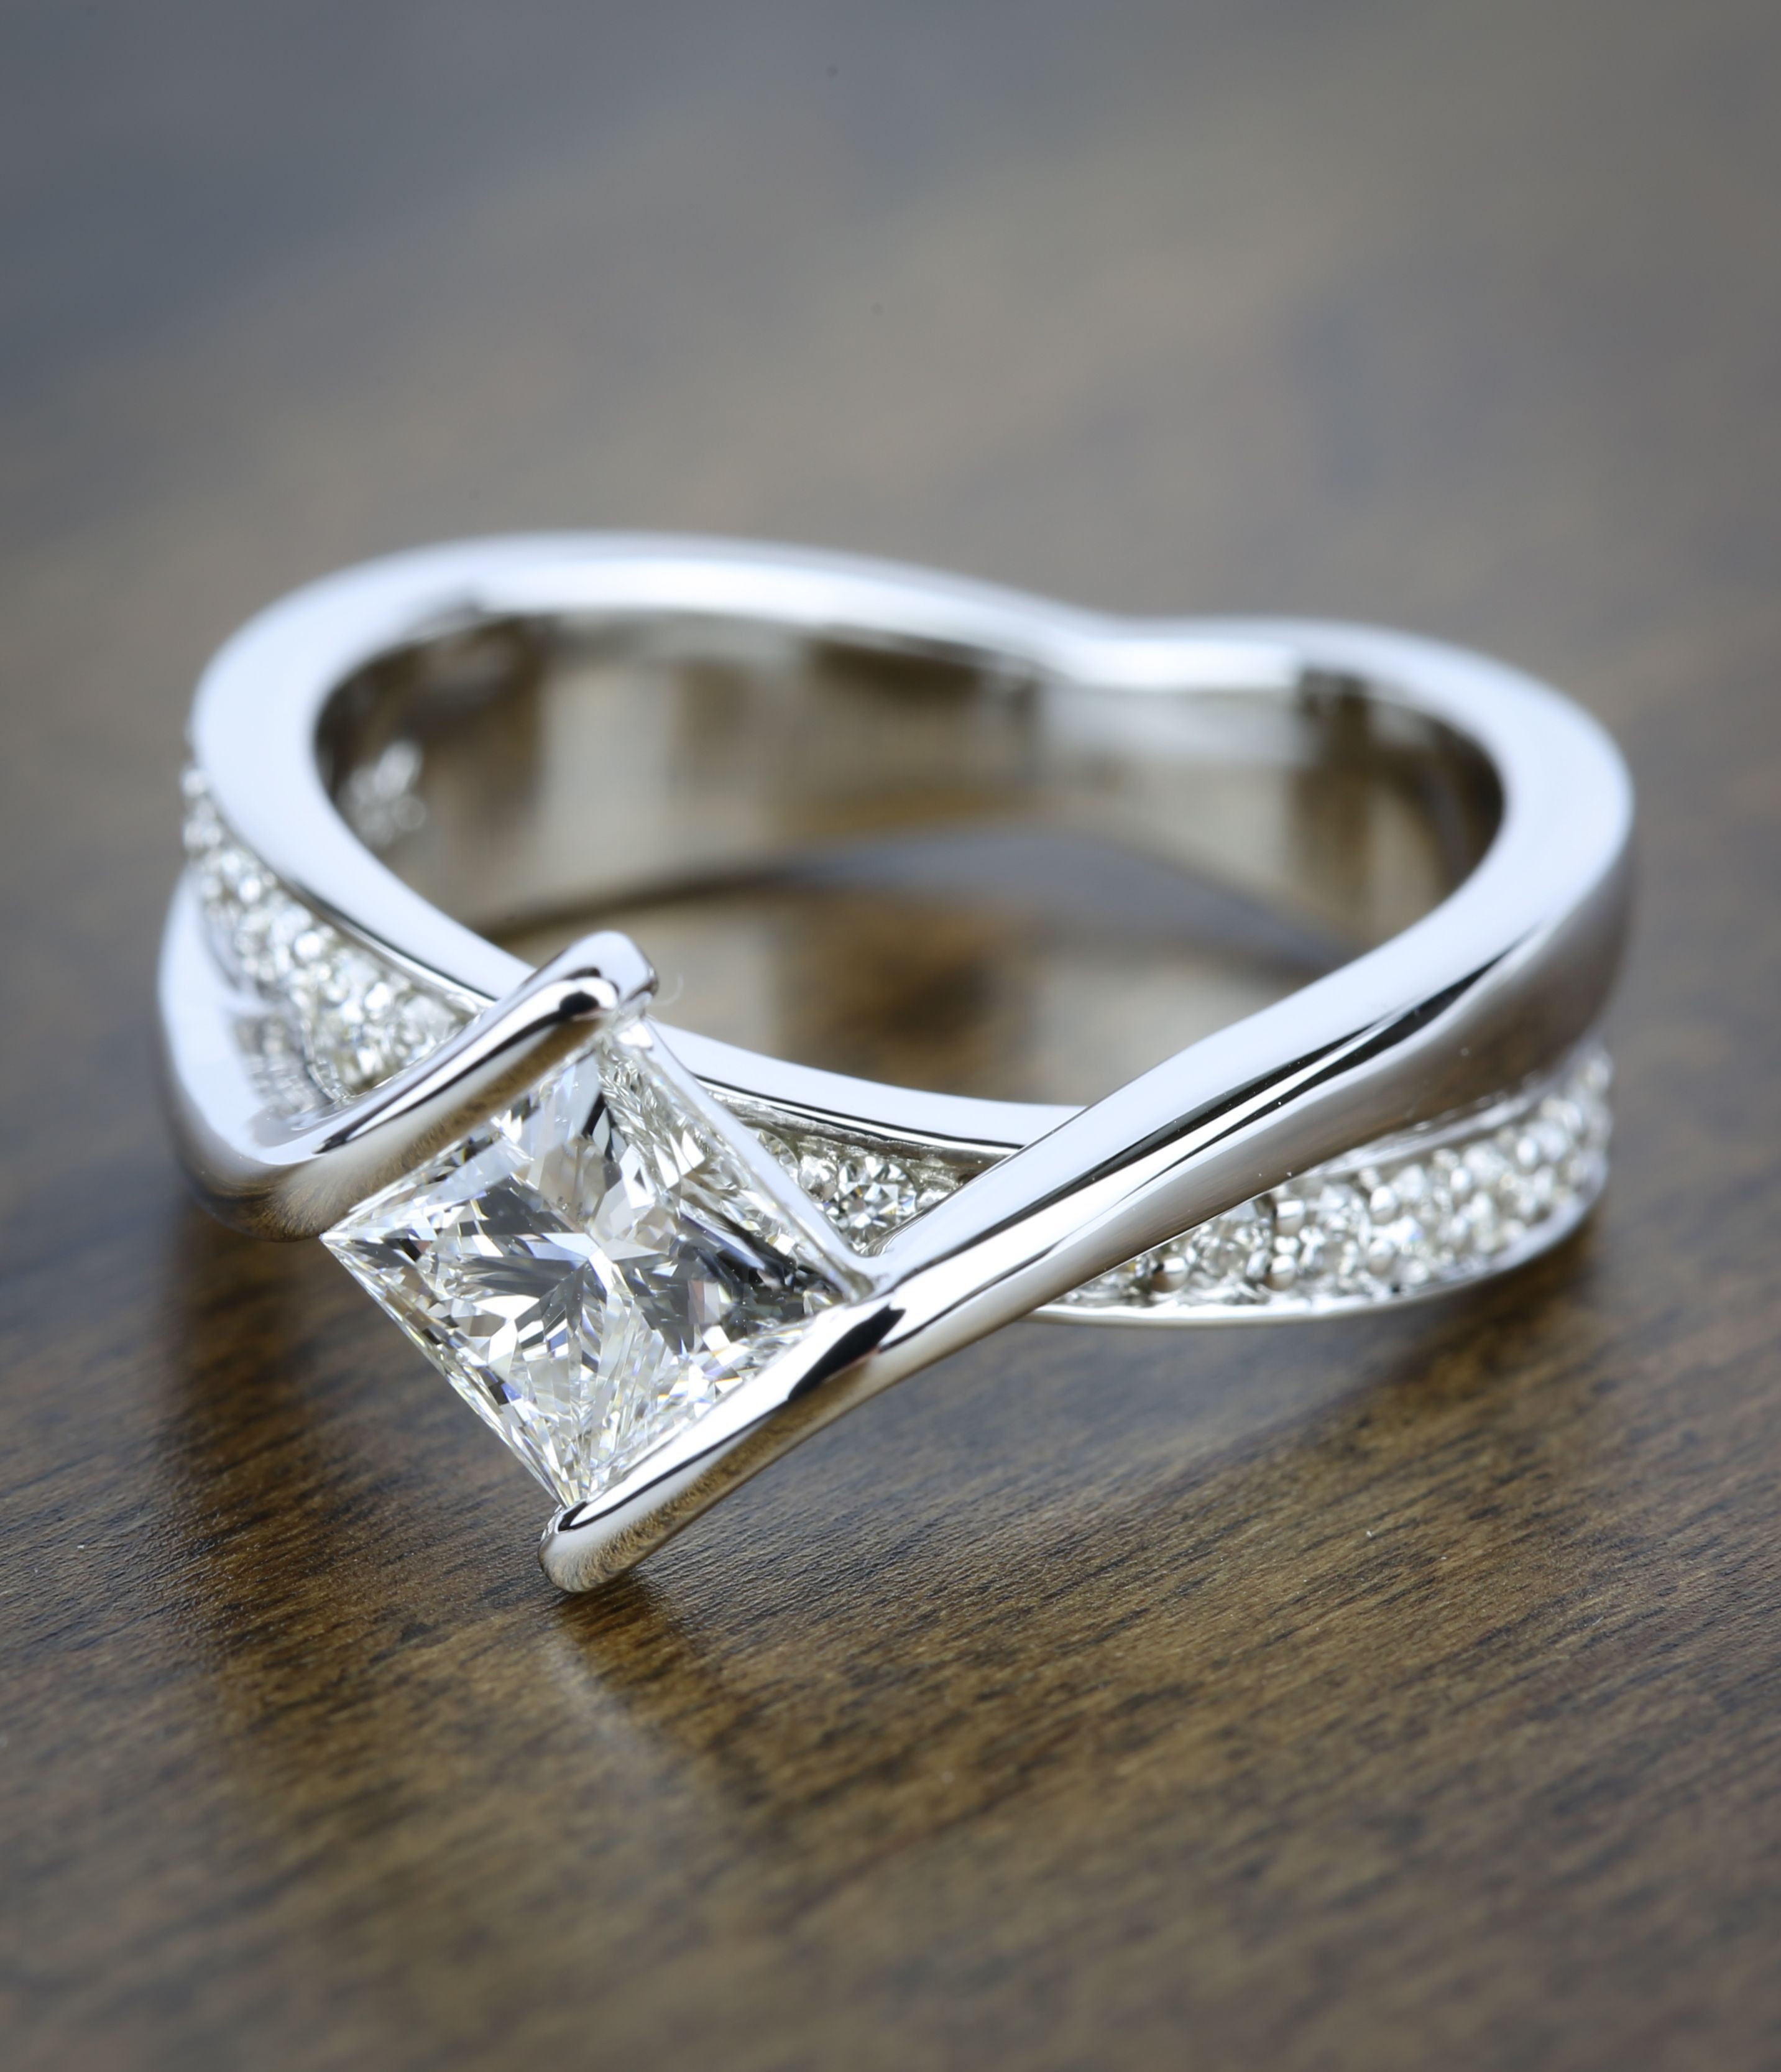 A beautiful Bezel Bridge Princess Cut Diamond Engagement Ring in White Gold! See m